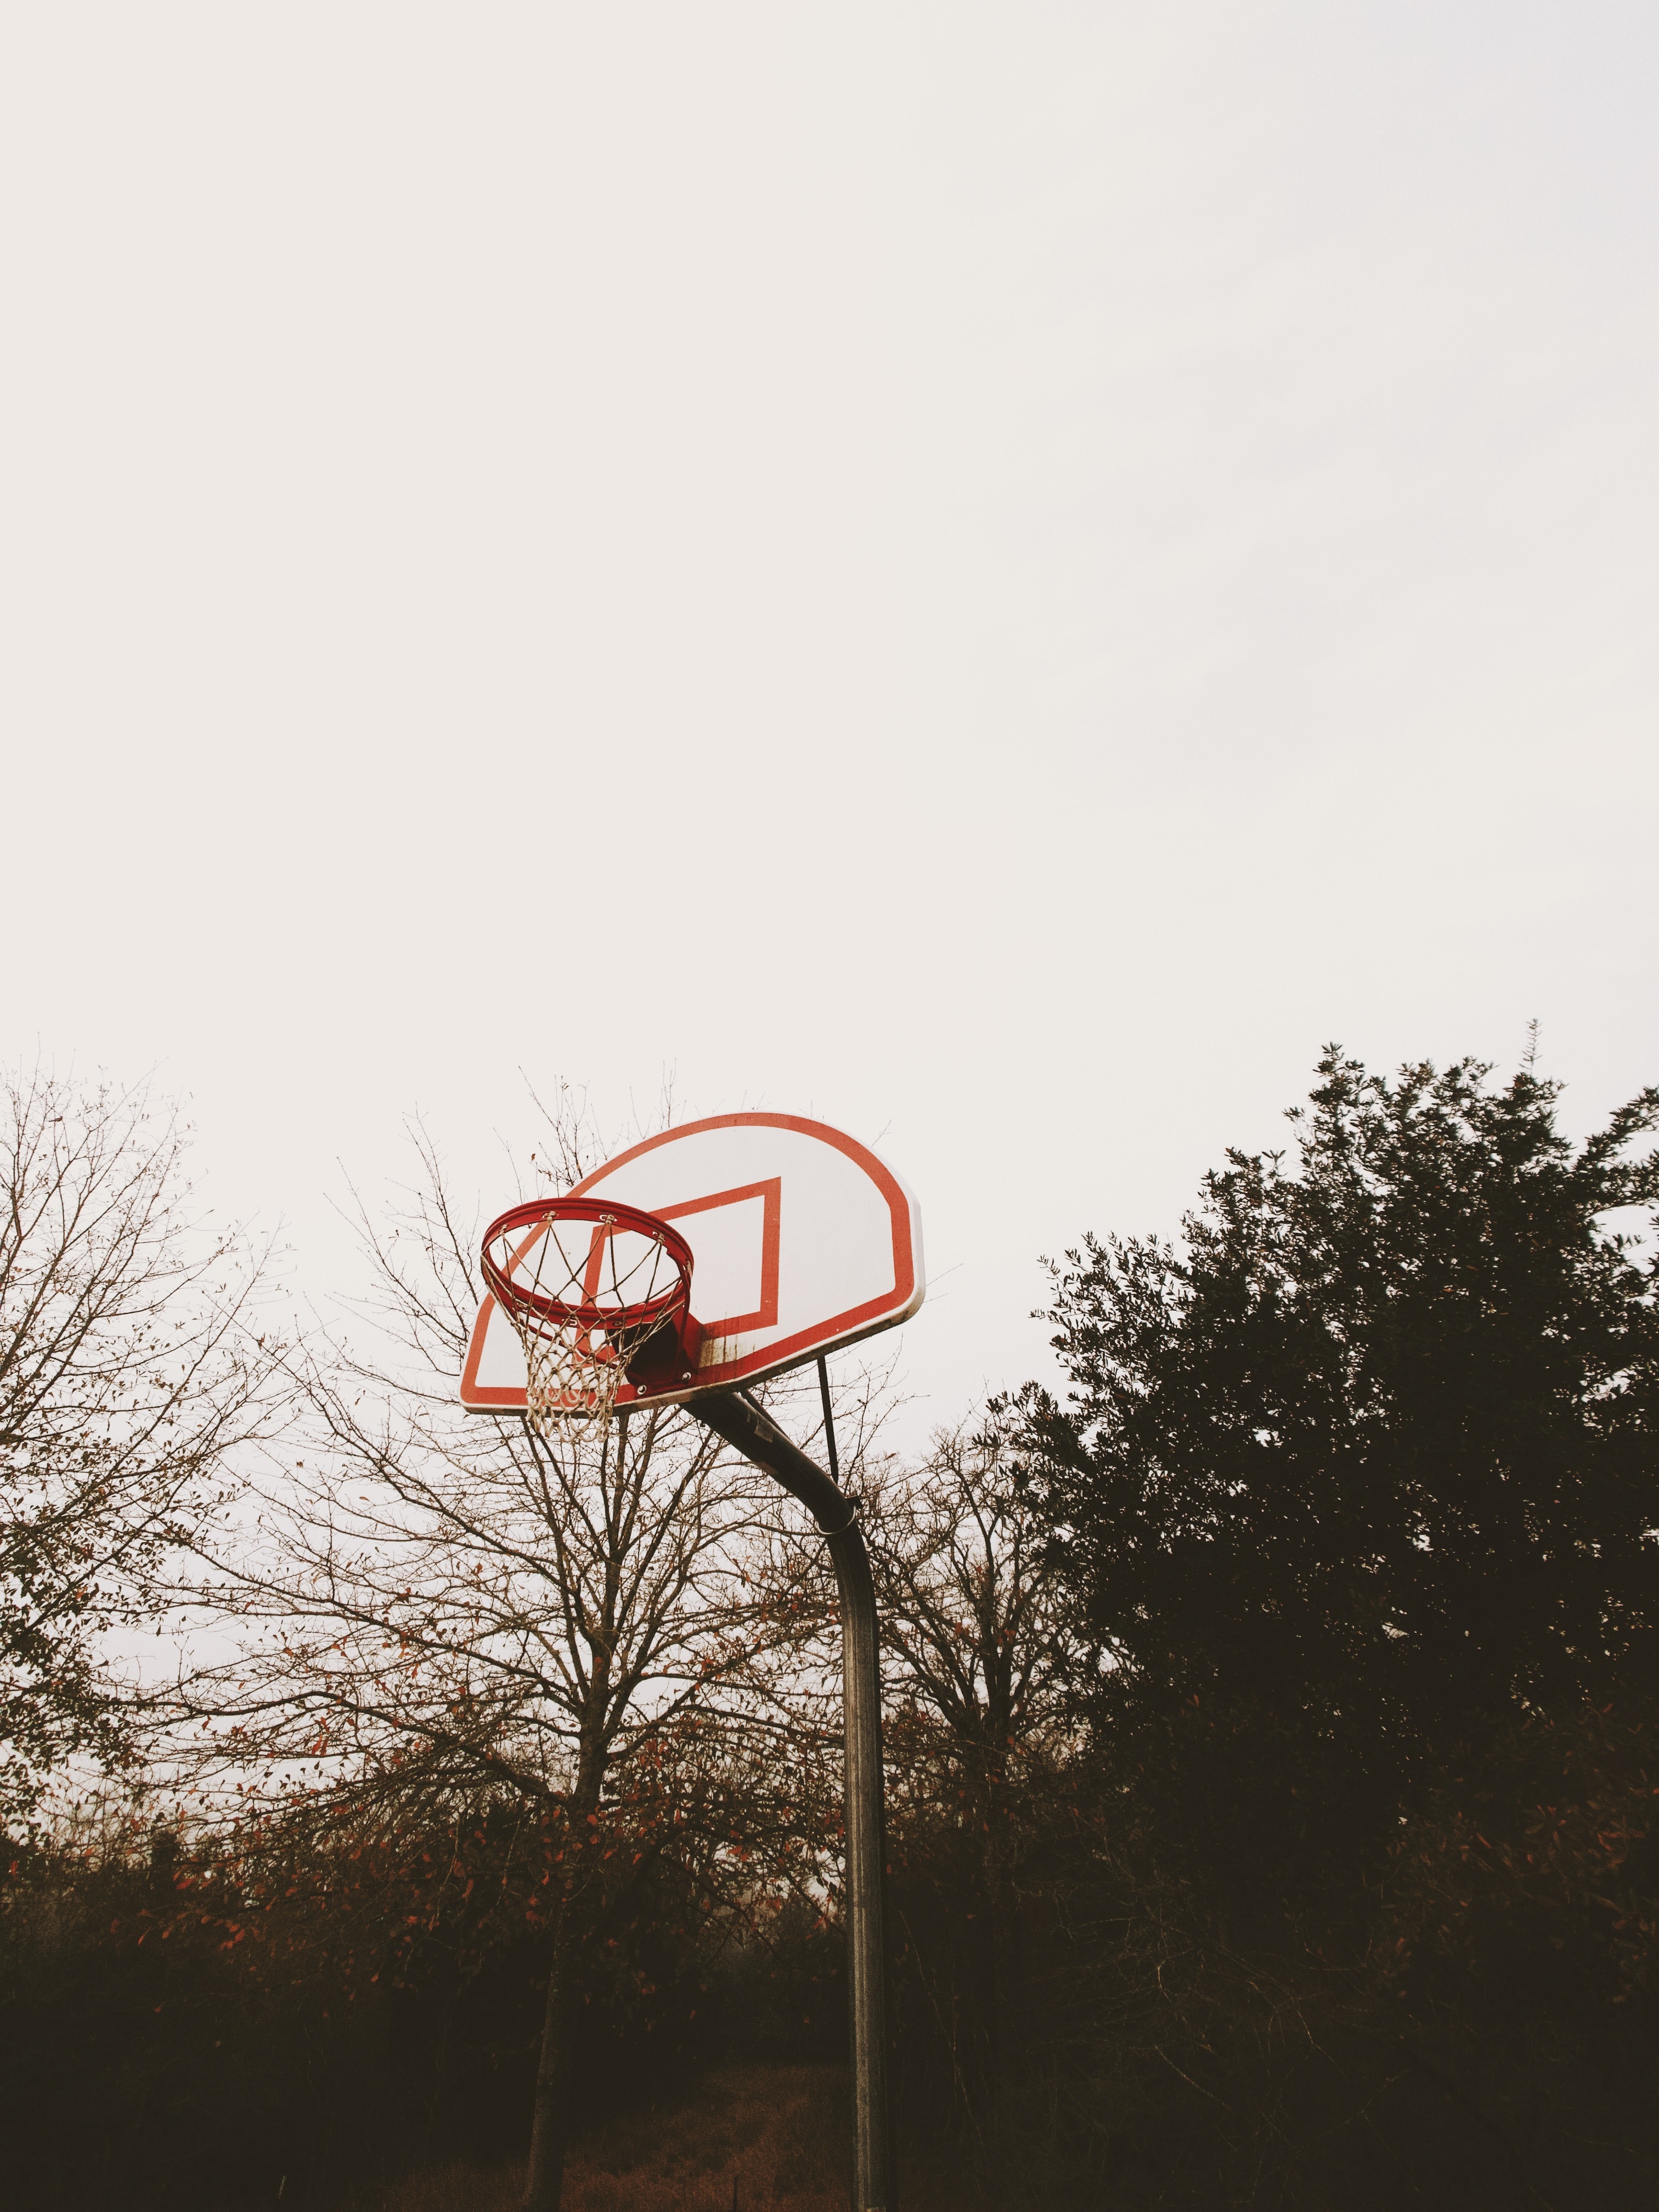 playground, basketball ring, trees, miscellanea, miscellaneous, platform, basketball backboard, basketball shield, basketball hoop